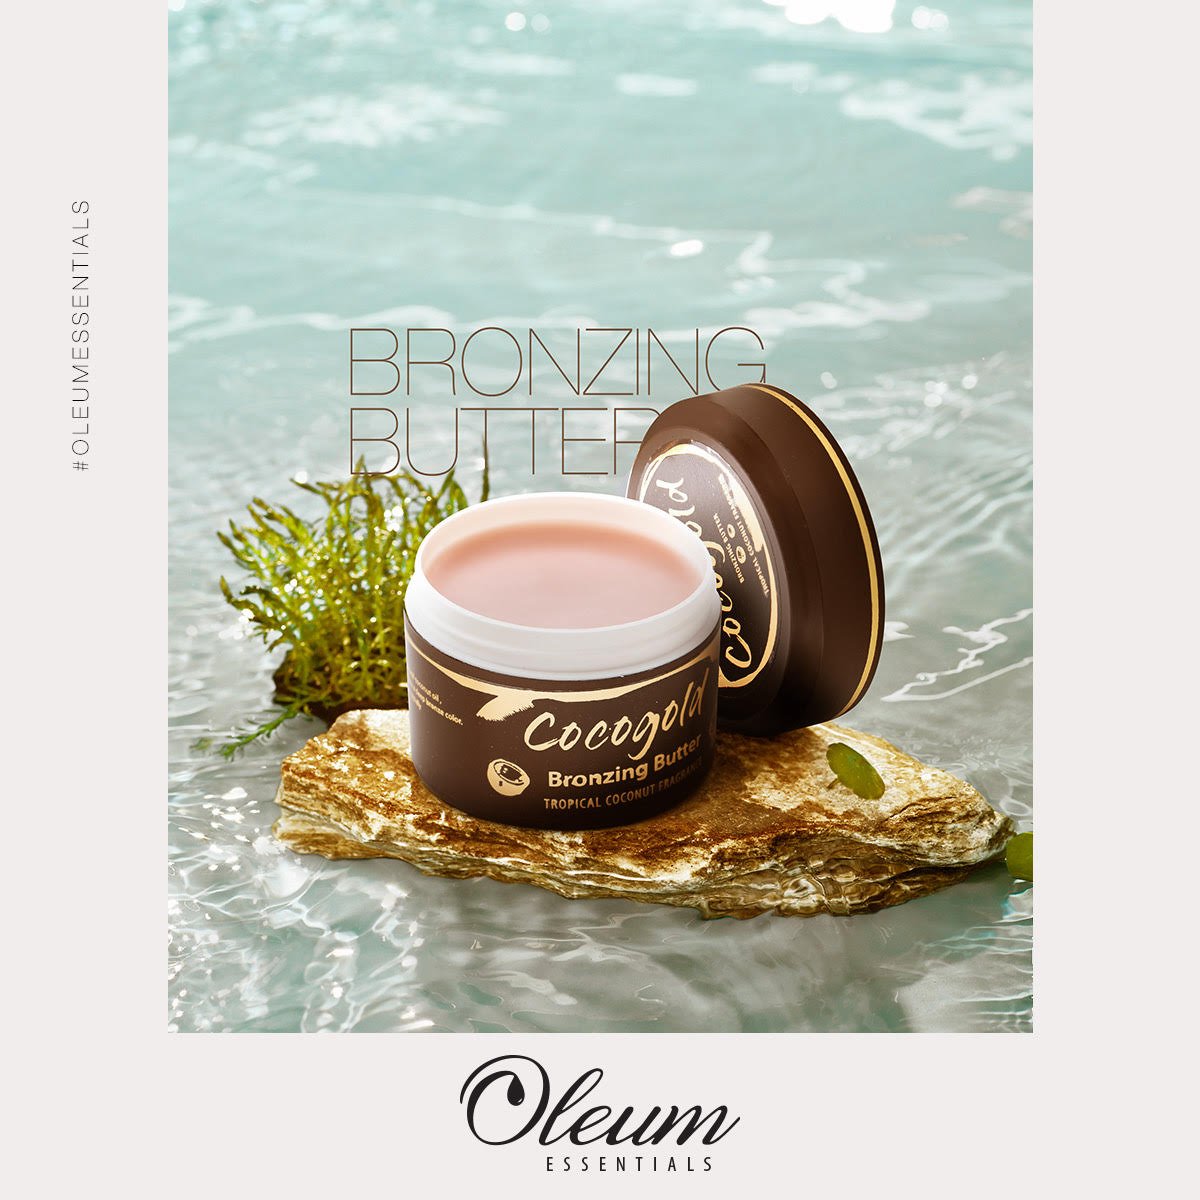 Oleum Essentials Coco gold Bronzing Butter 250ml - IZZAT DAOUK Lebanon